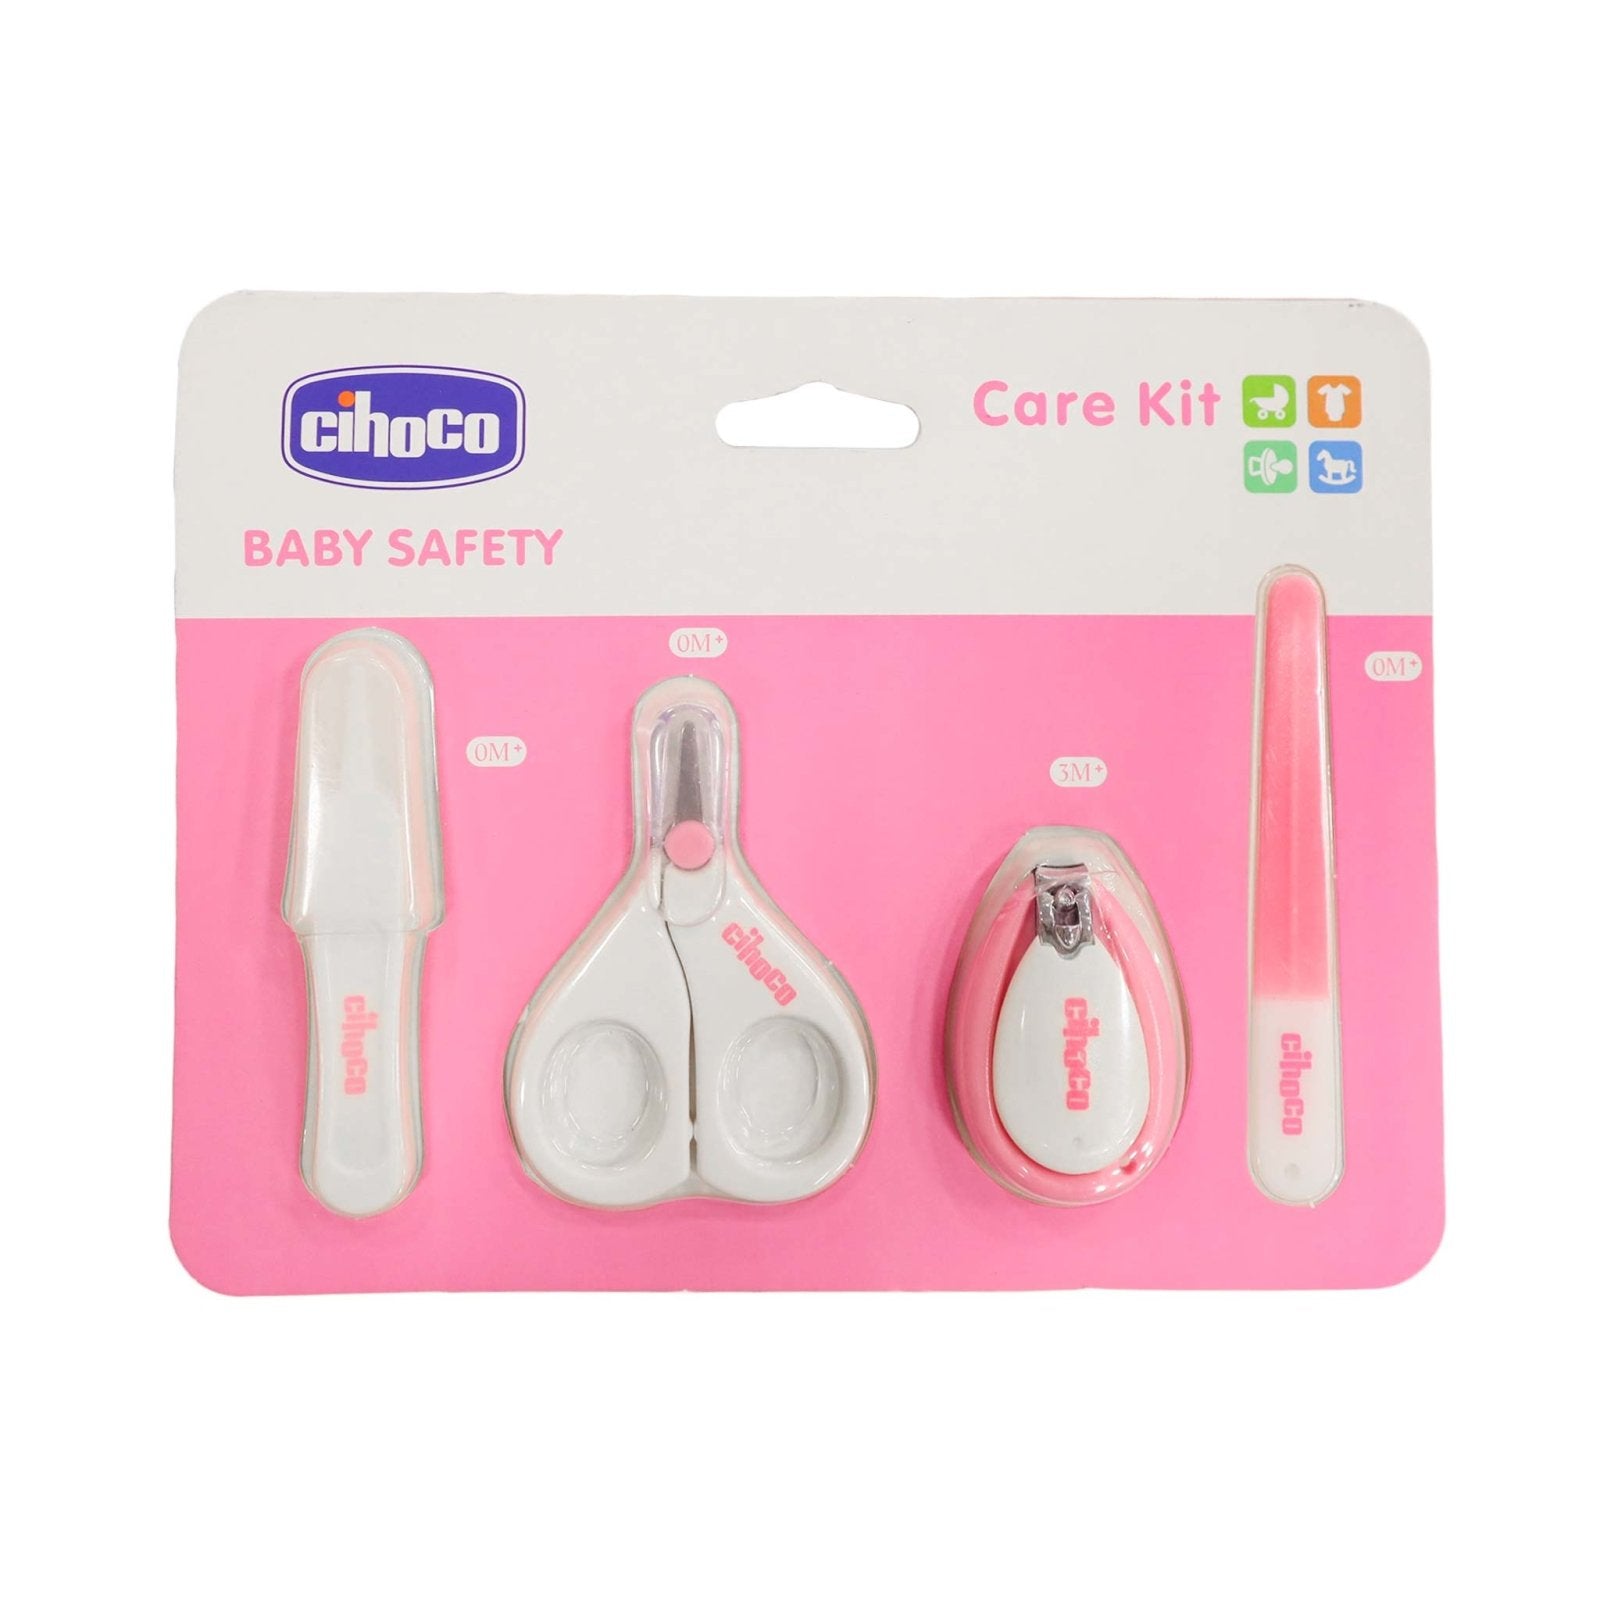 Baby Care Kit White Color | cihoco - Zubaidas Mothershop